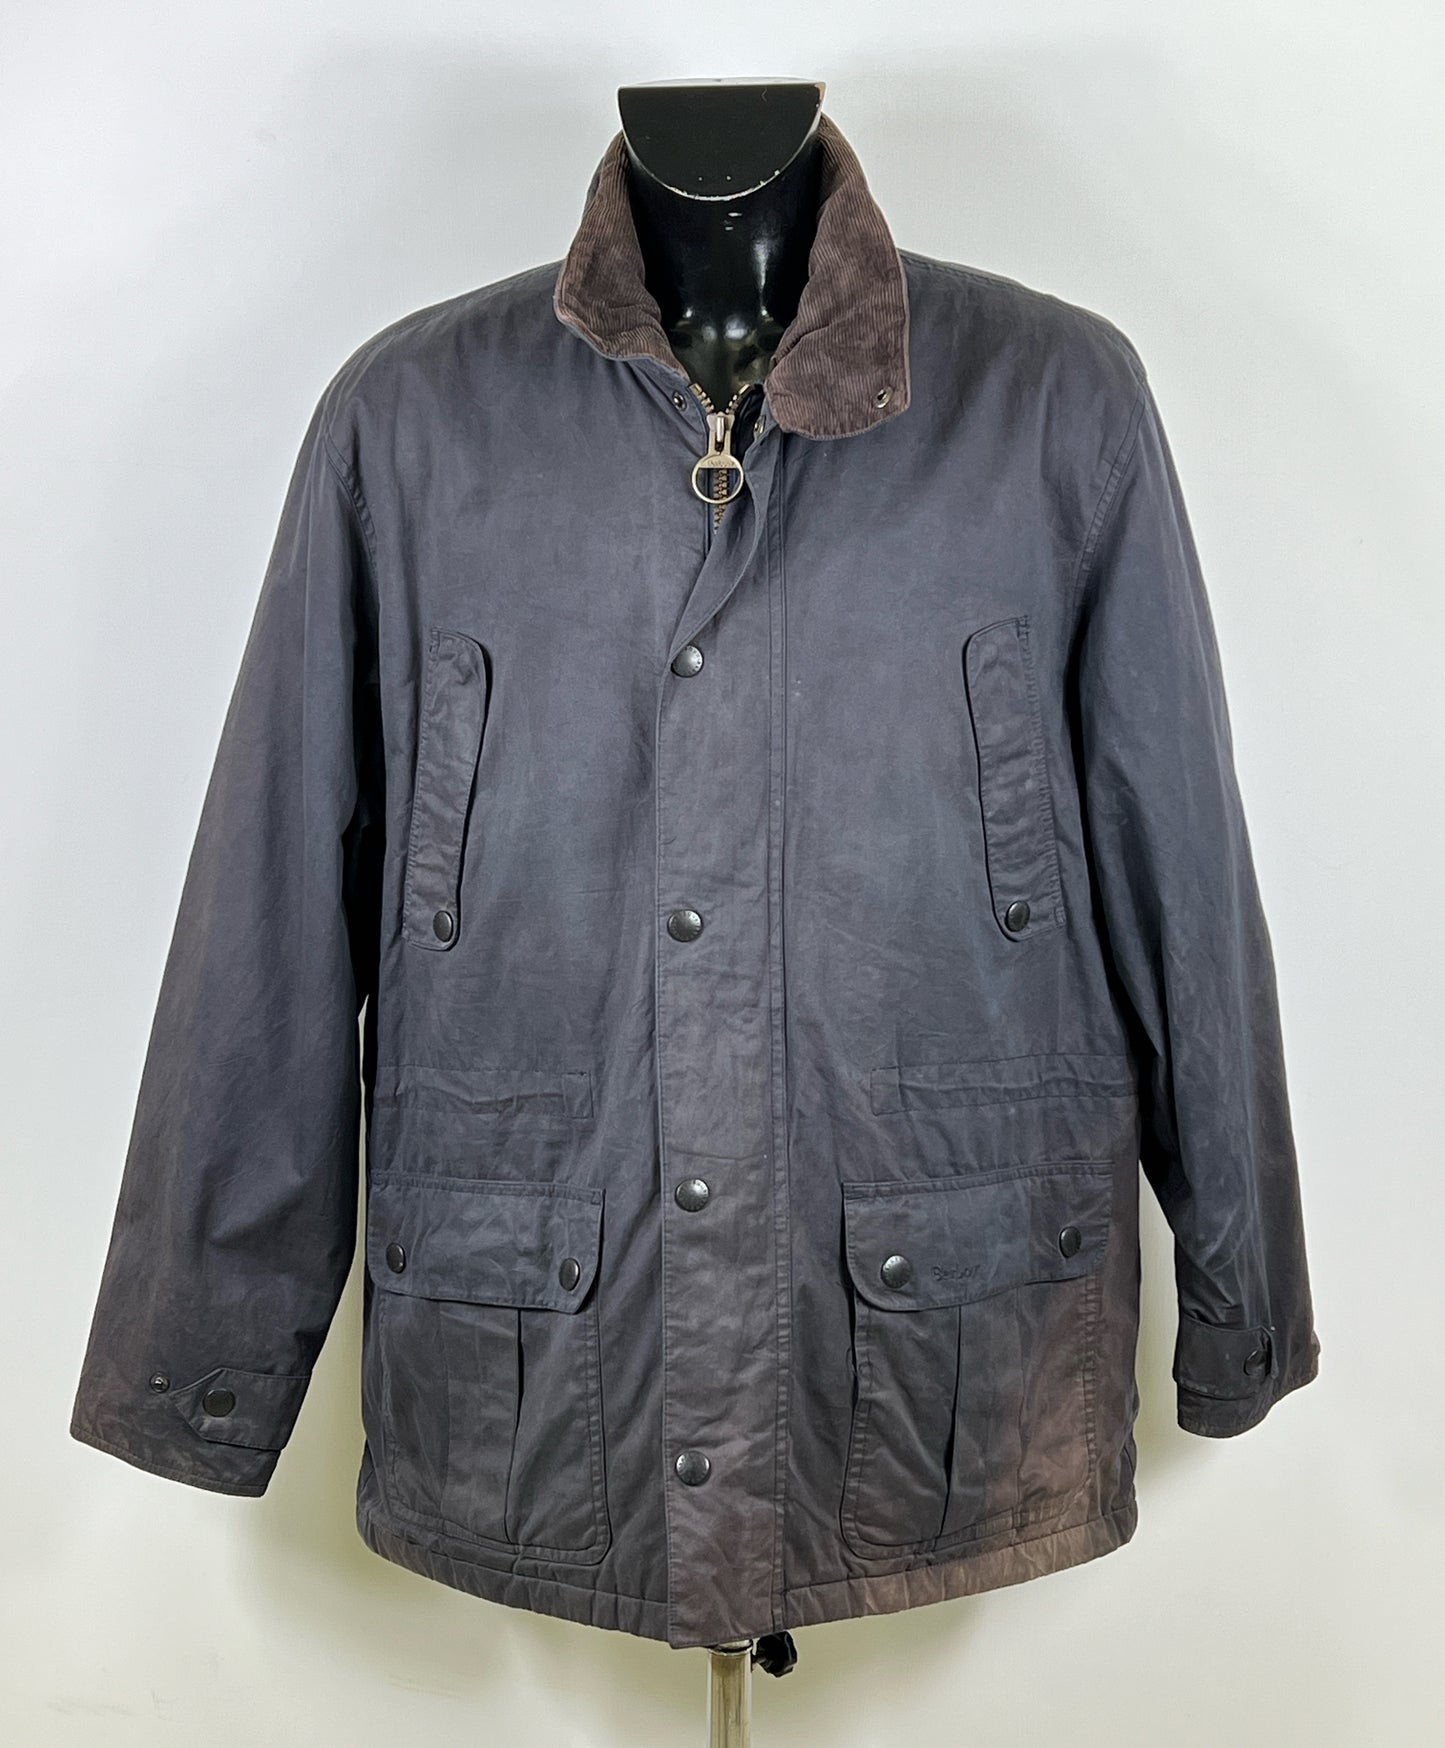 Giacca Barbour impermeabile Wetland Blu XL  Man Navy Waterproof cotton jacket size XL